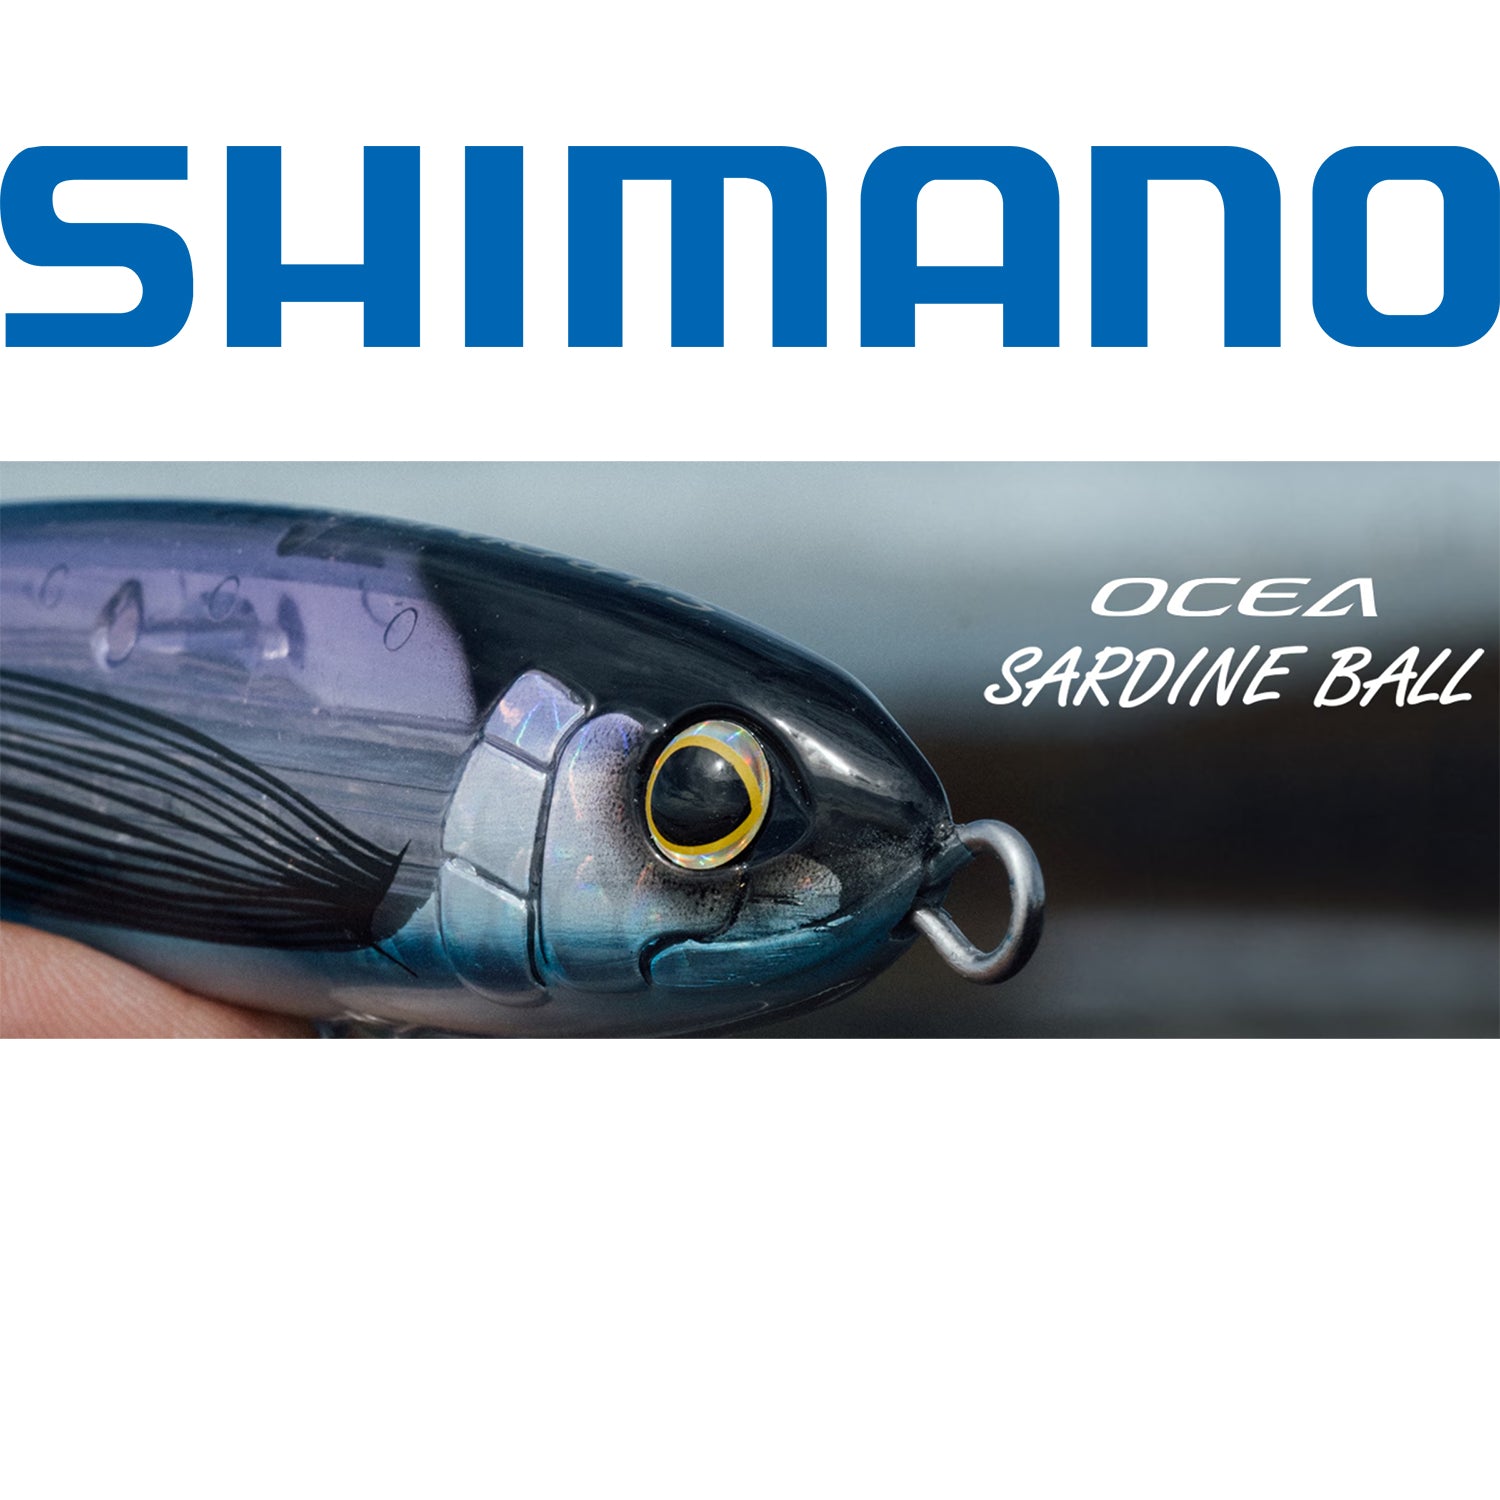 Shimano Ocea Sardine Ball 130S Cover